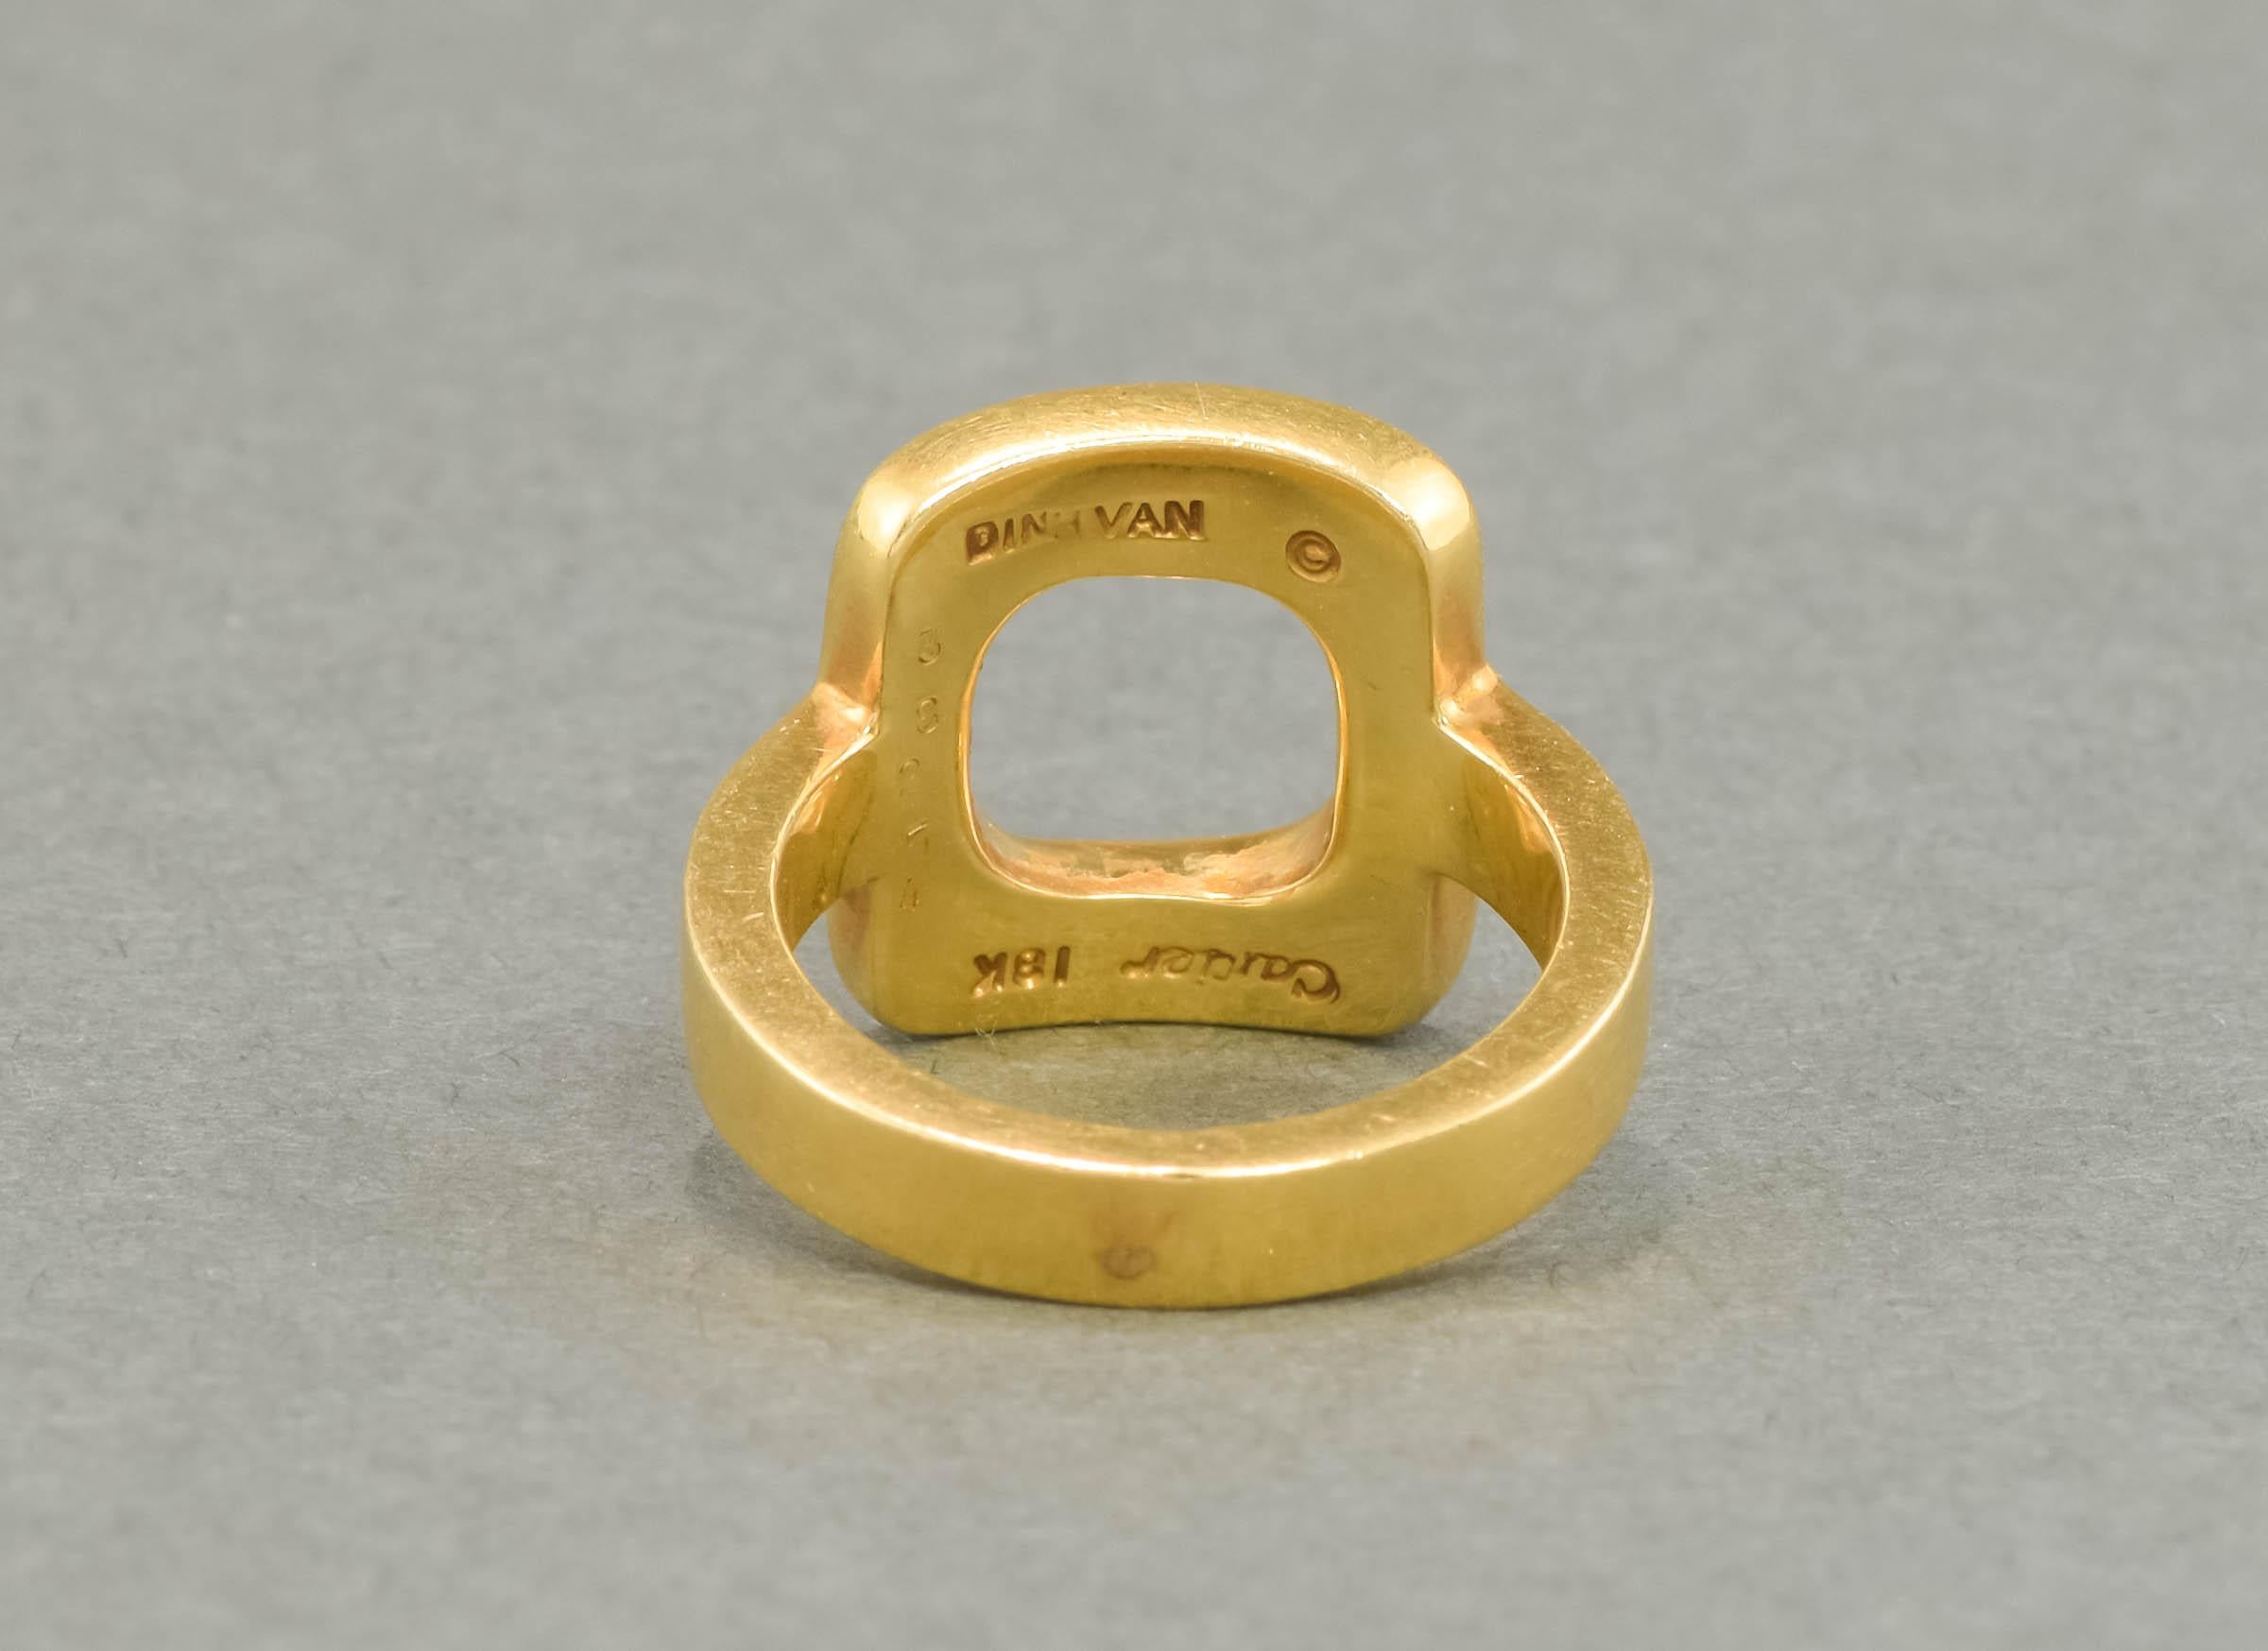 Cartier Dinh Van 18k Gold Ring - Striking Modernist Design, circa 1960s 4